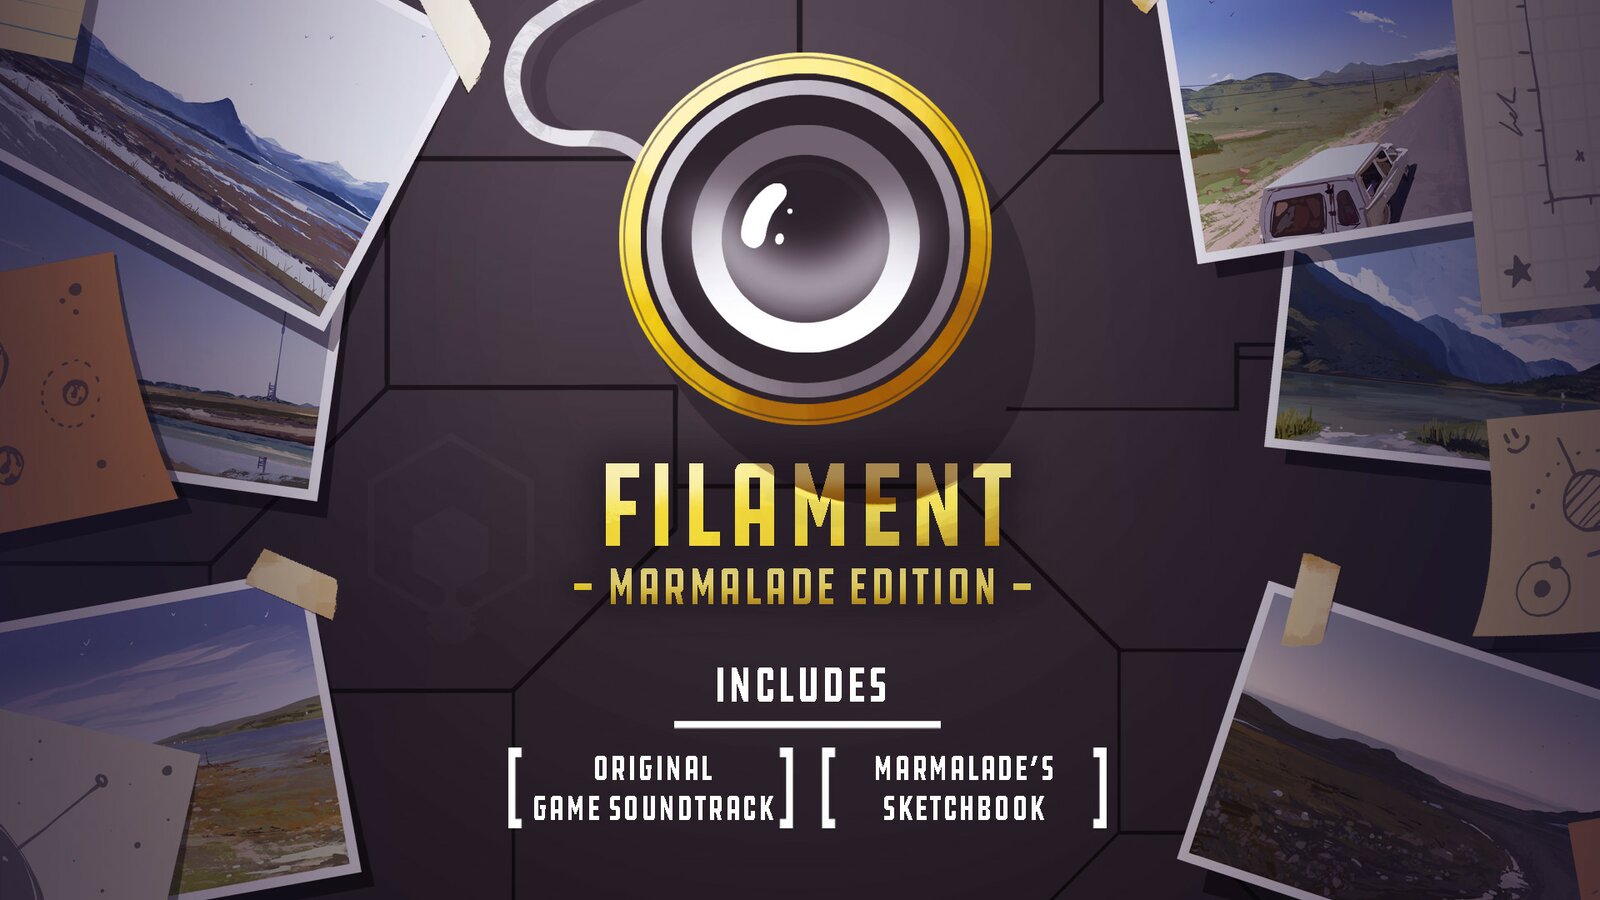 Filament - Marmalade Edition